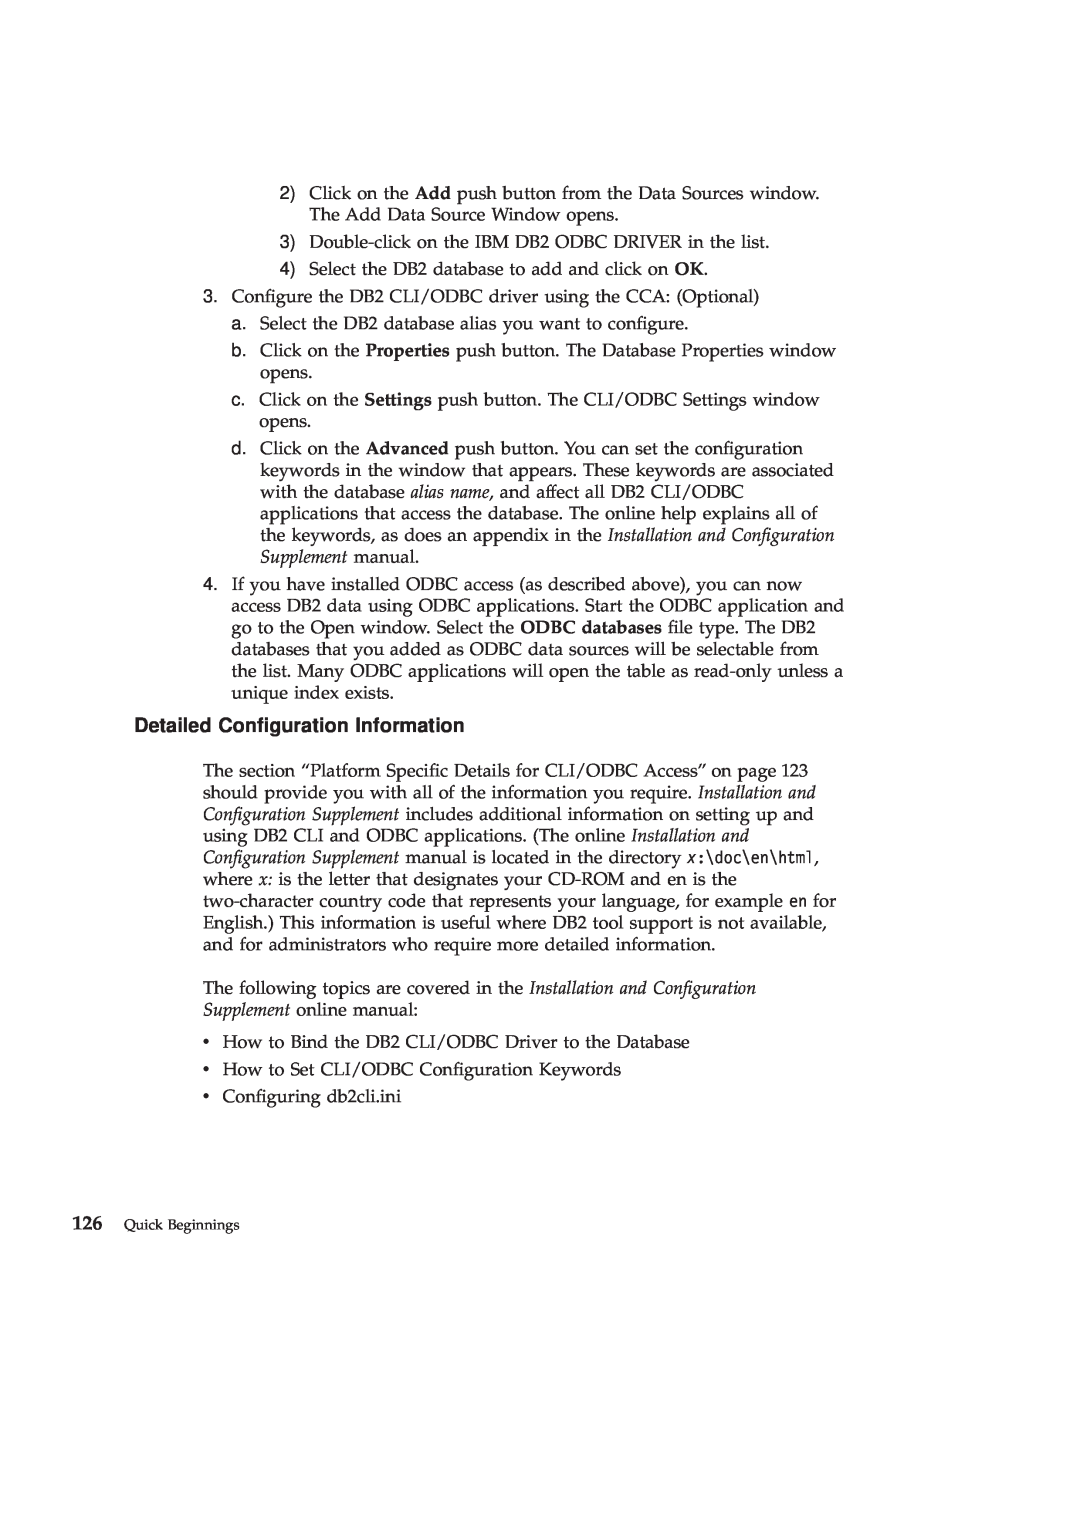 IBM GC09-2830-00 manual Detailed Conguration Information, Quick Beginnings 